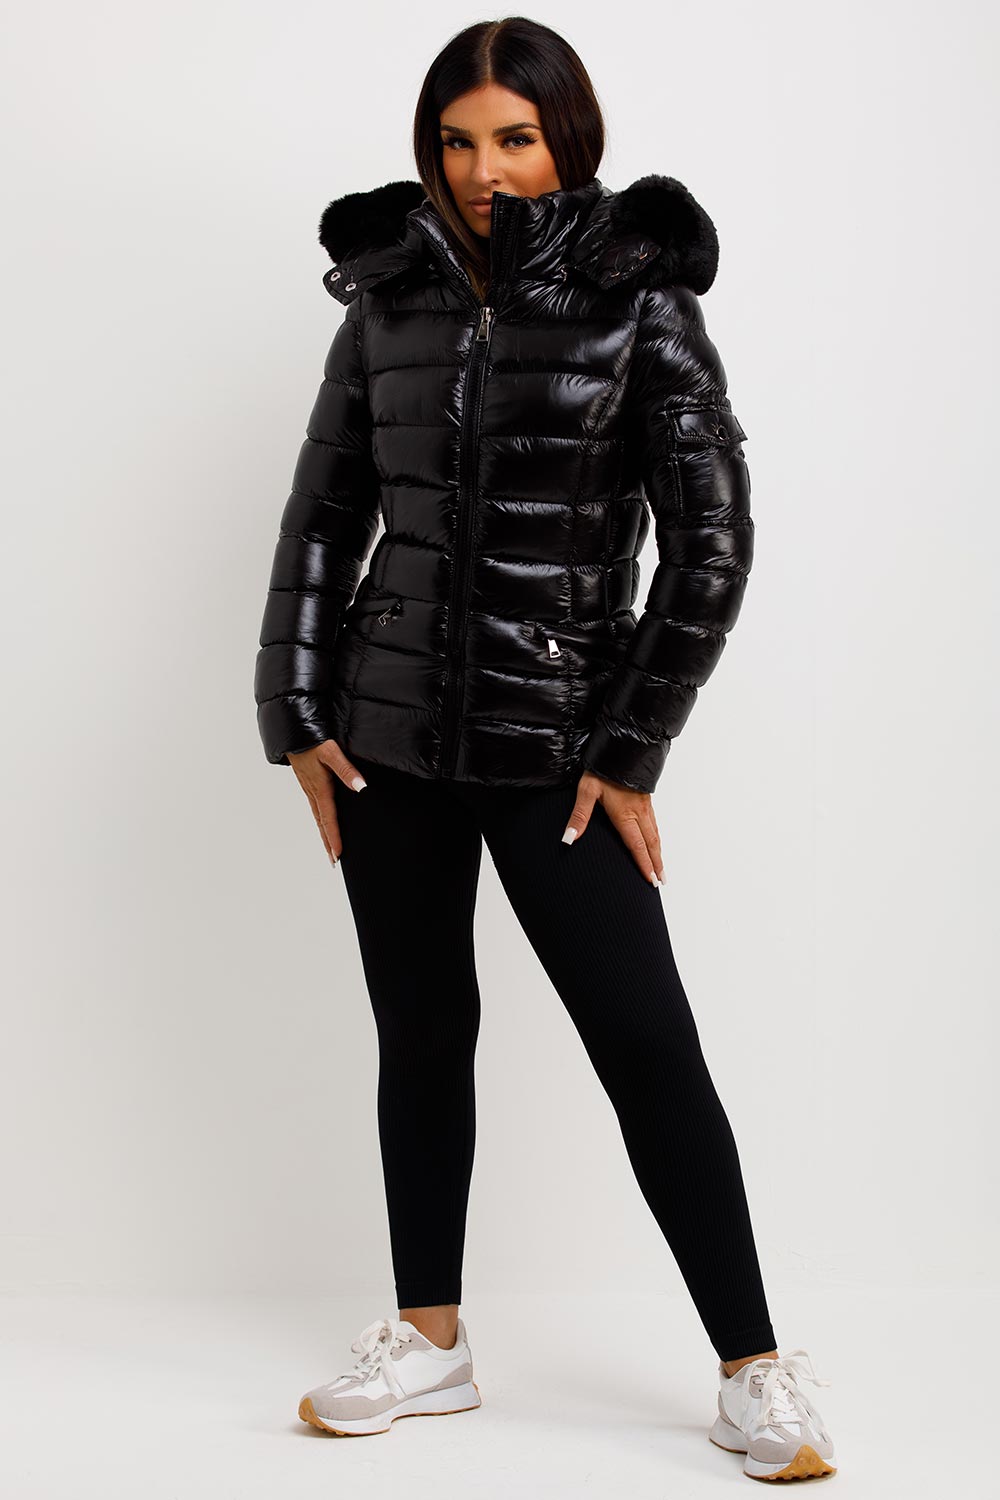 womens puffer jacket with fur hood outerwear